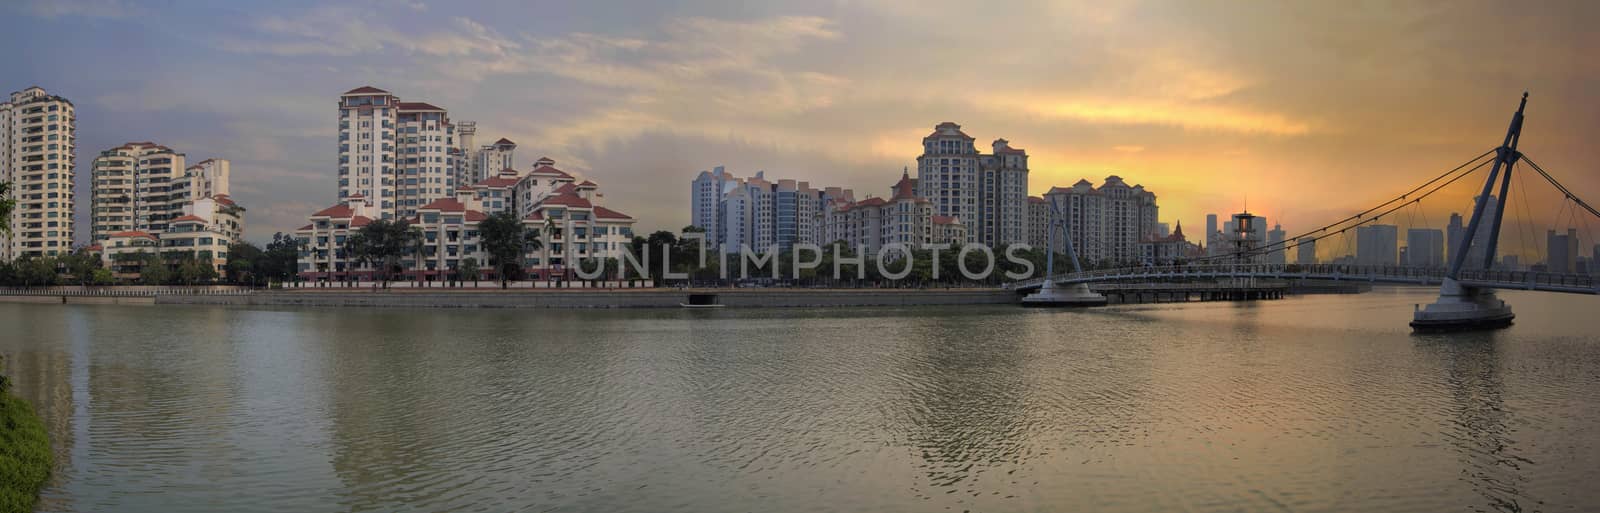 Tanjong Rhu Residential Housing District with Outdoors Park Bridge Sunset Over Kallang Basin in Singapore Panorama